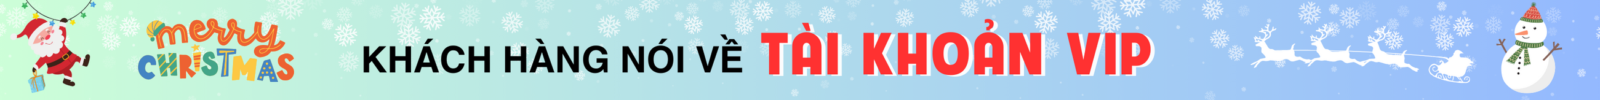 title-merry-christmas-taikhoanvip